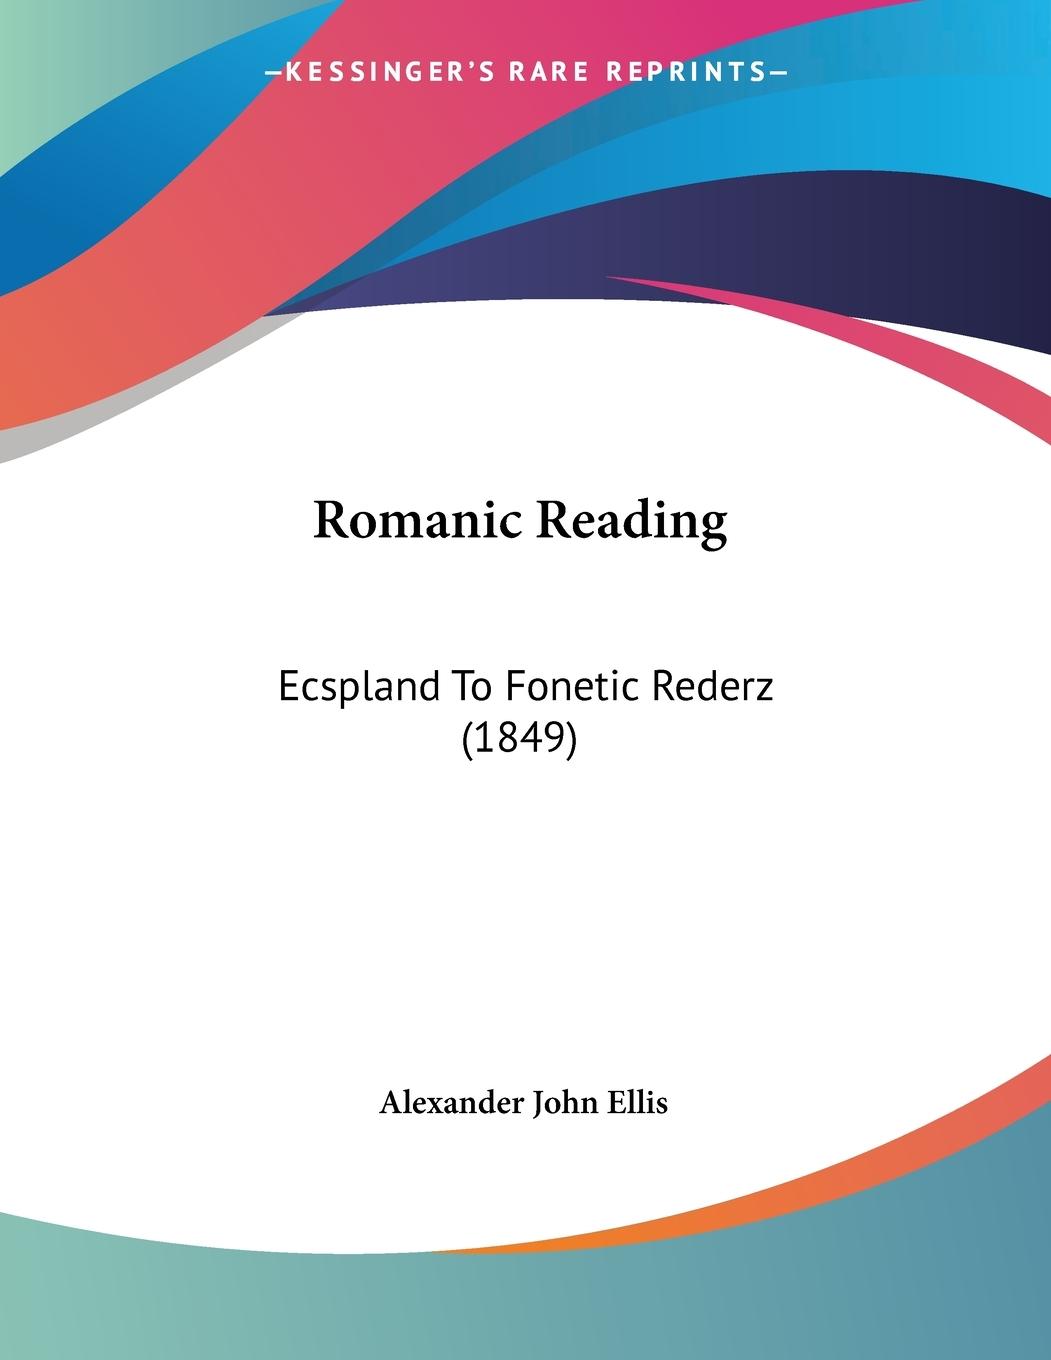 Romanic Reading - Ellis, Alexander John